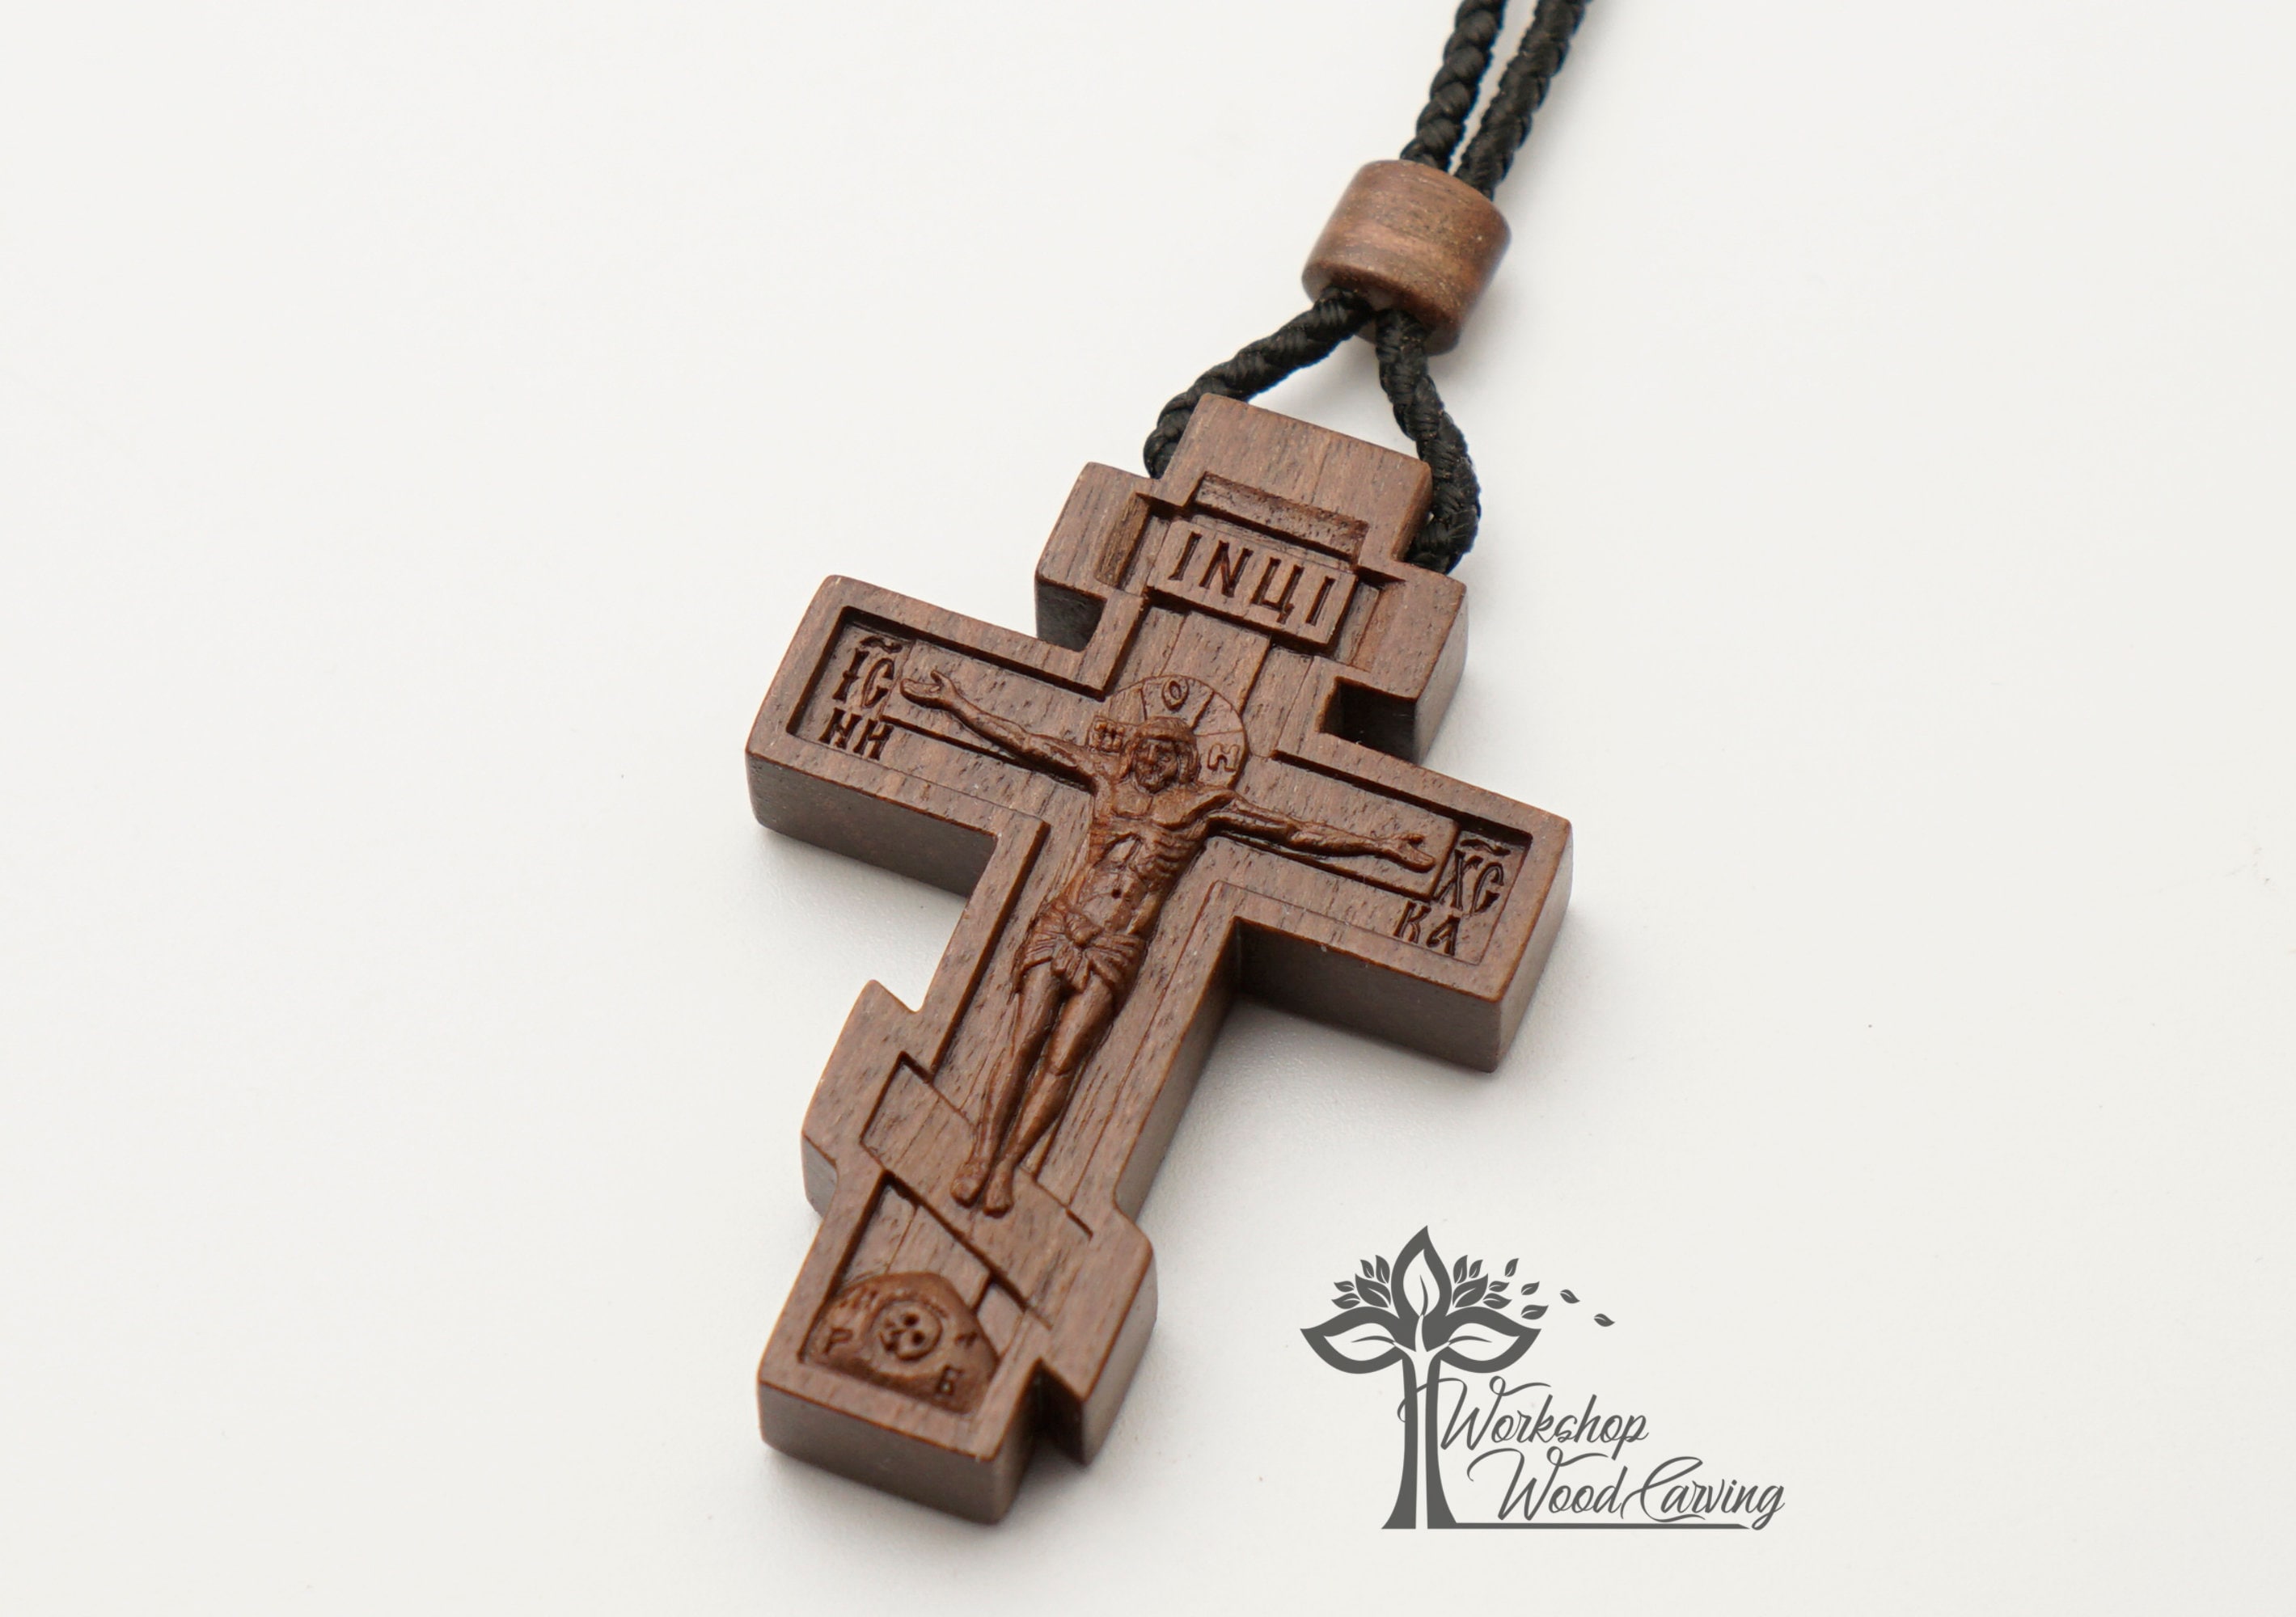 Wooden cross pendant of Saint Benoît and small box